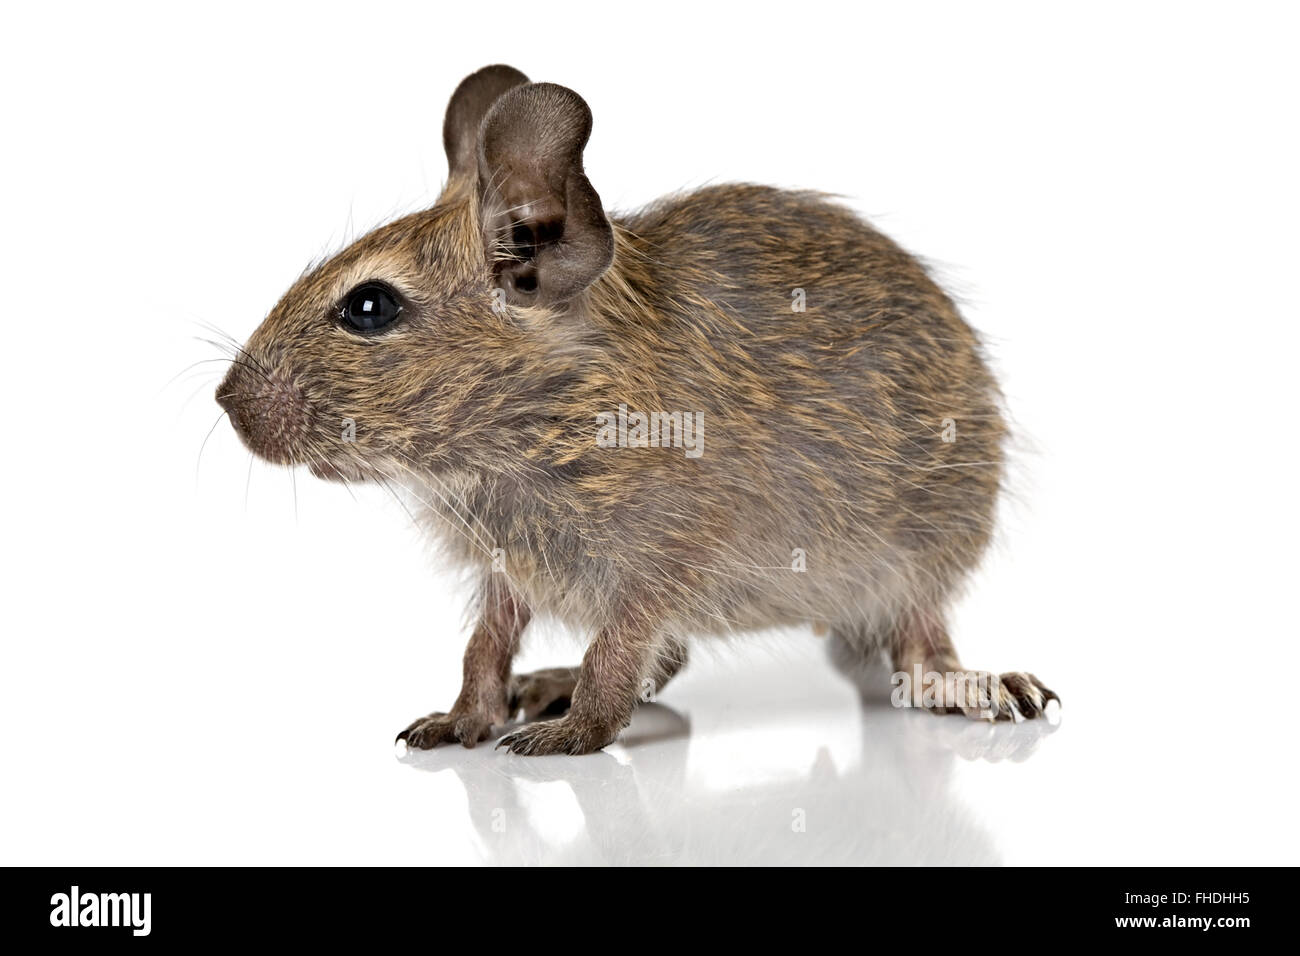 small baby rodent degu Stock Photo